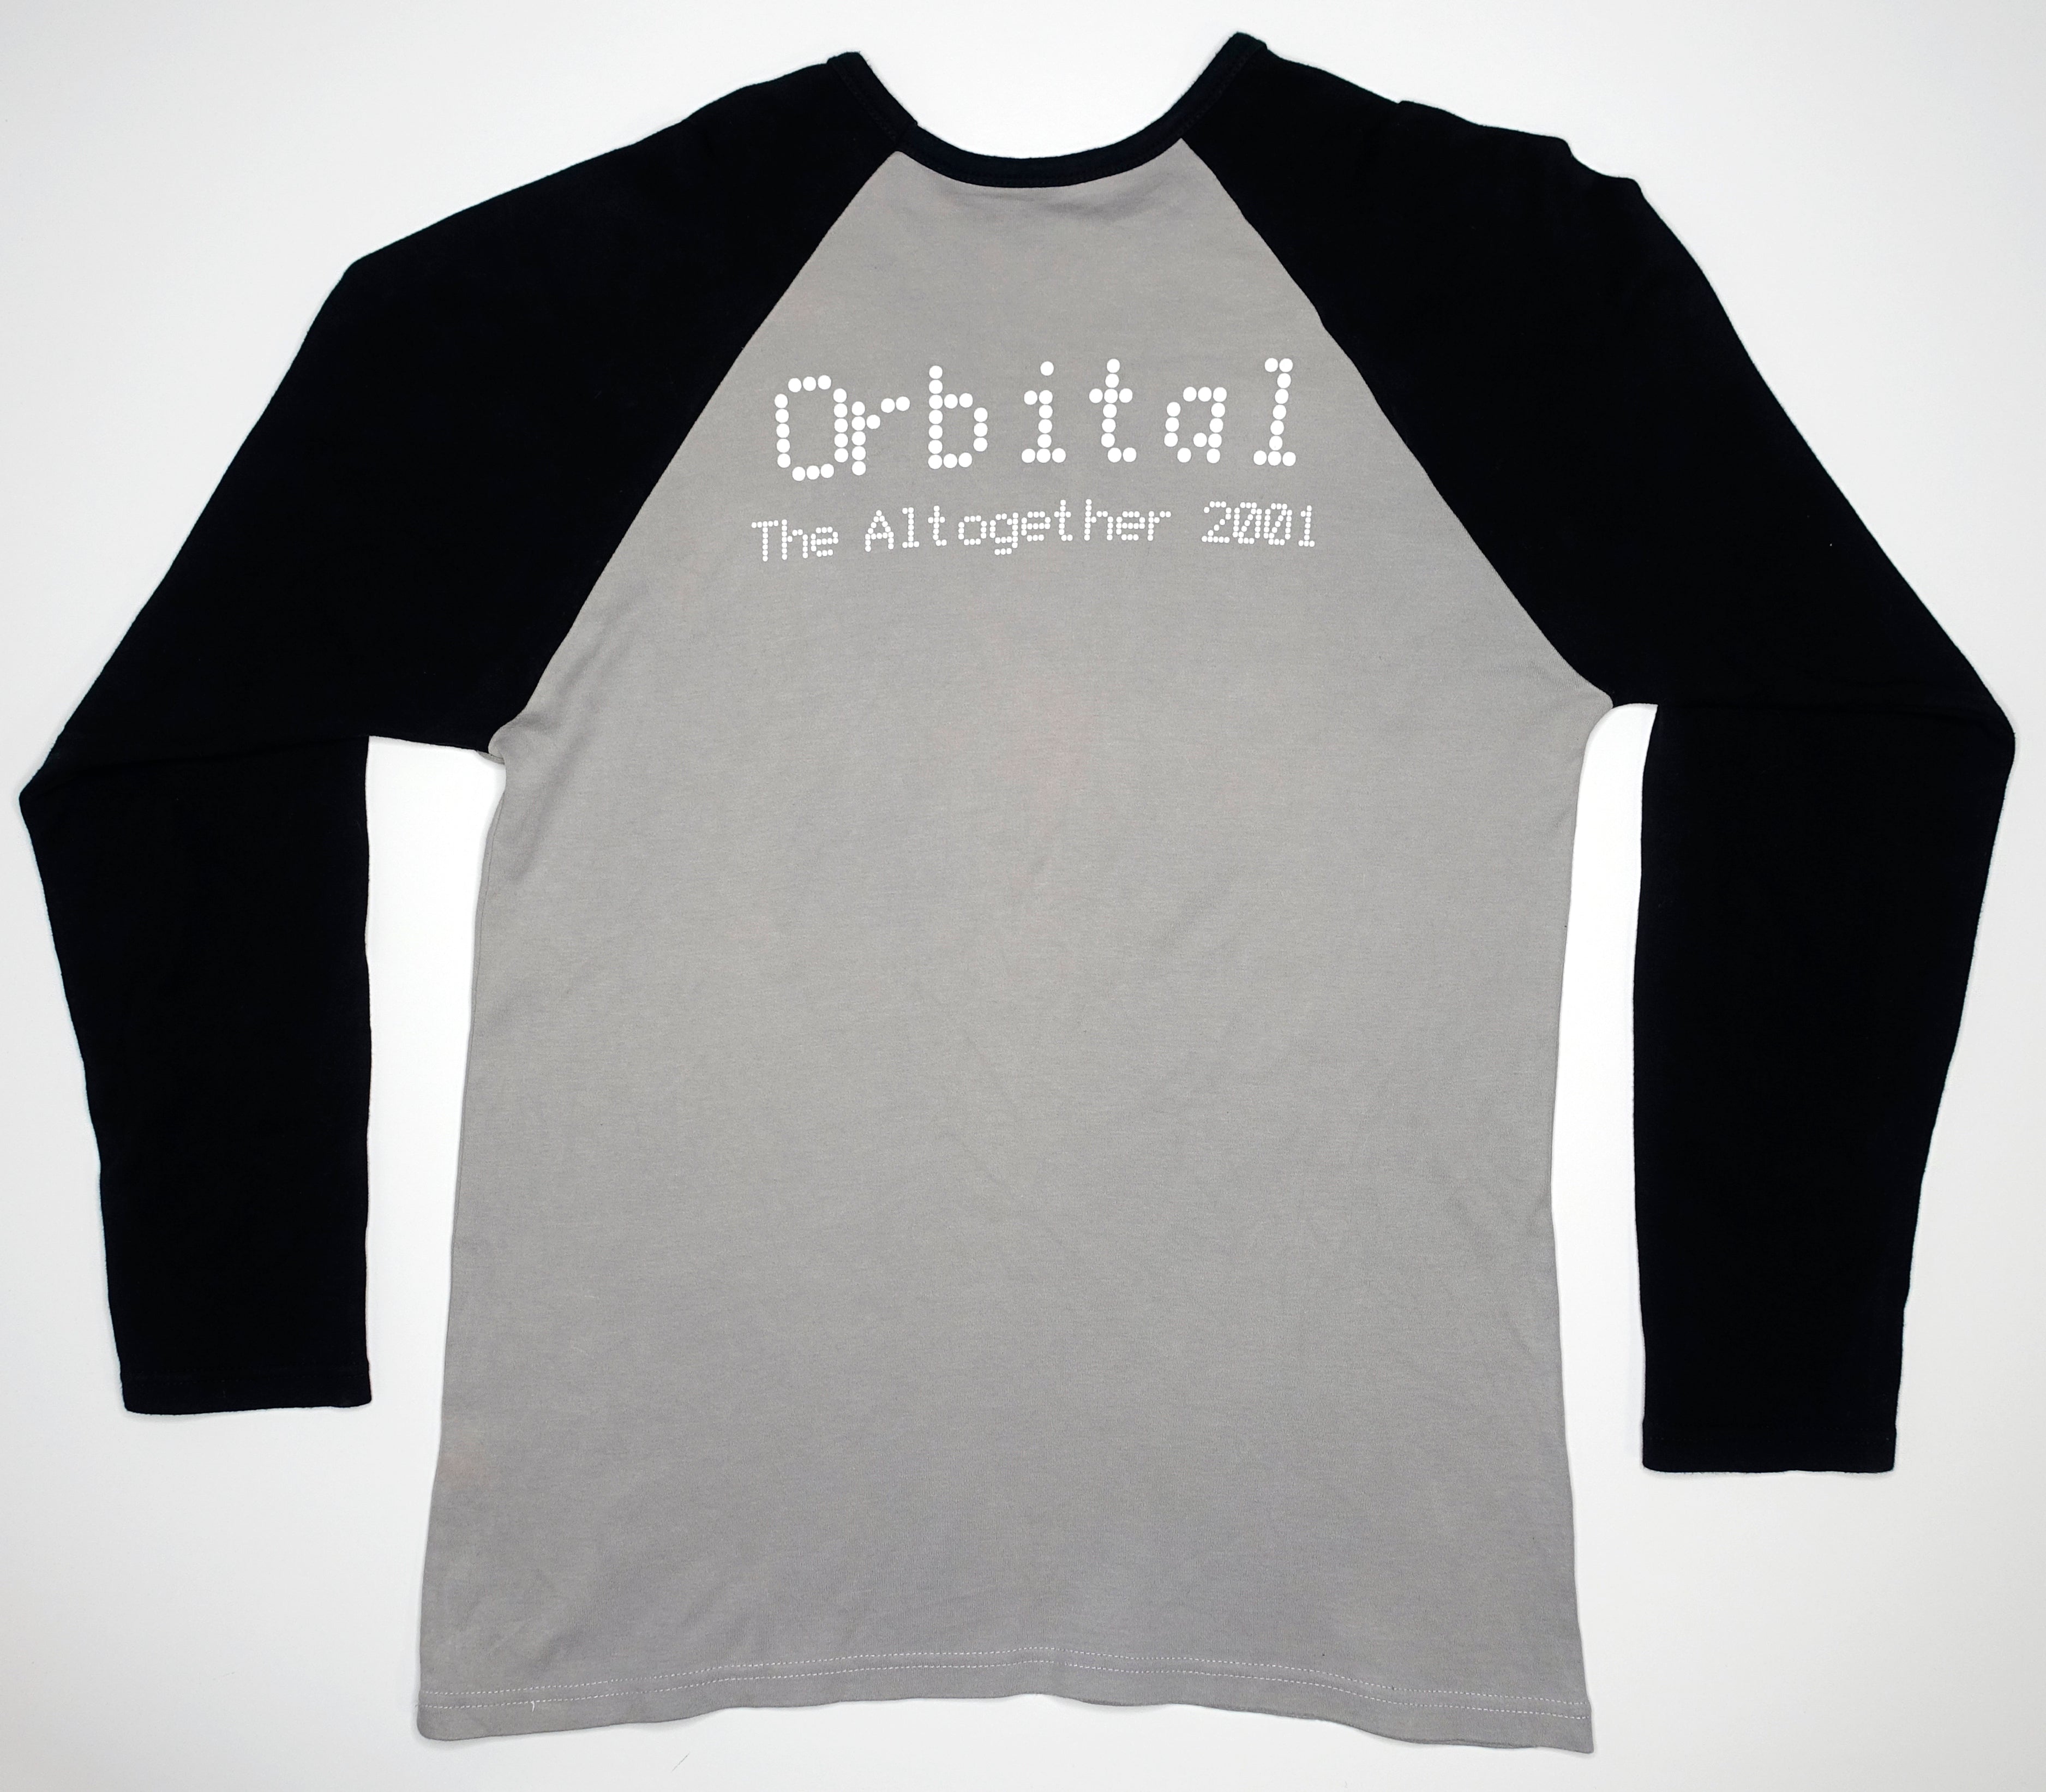 Orbital - the Altogether 2001 Tour Long Sleeve Shirt Size Large